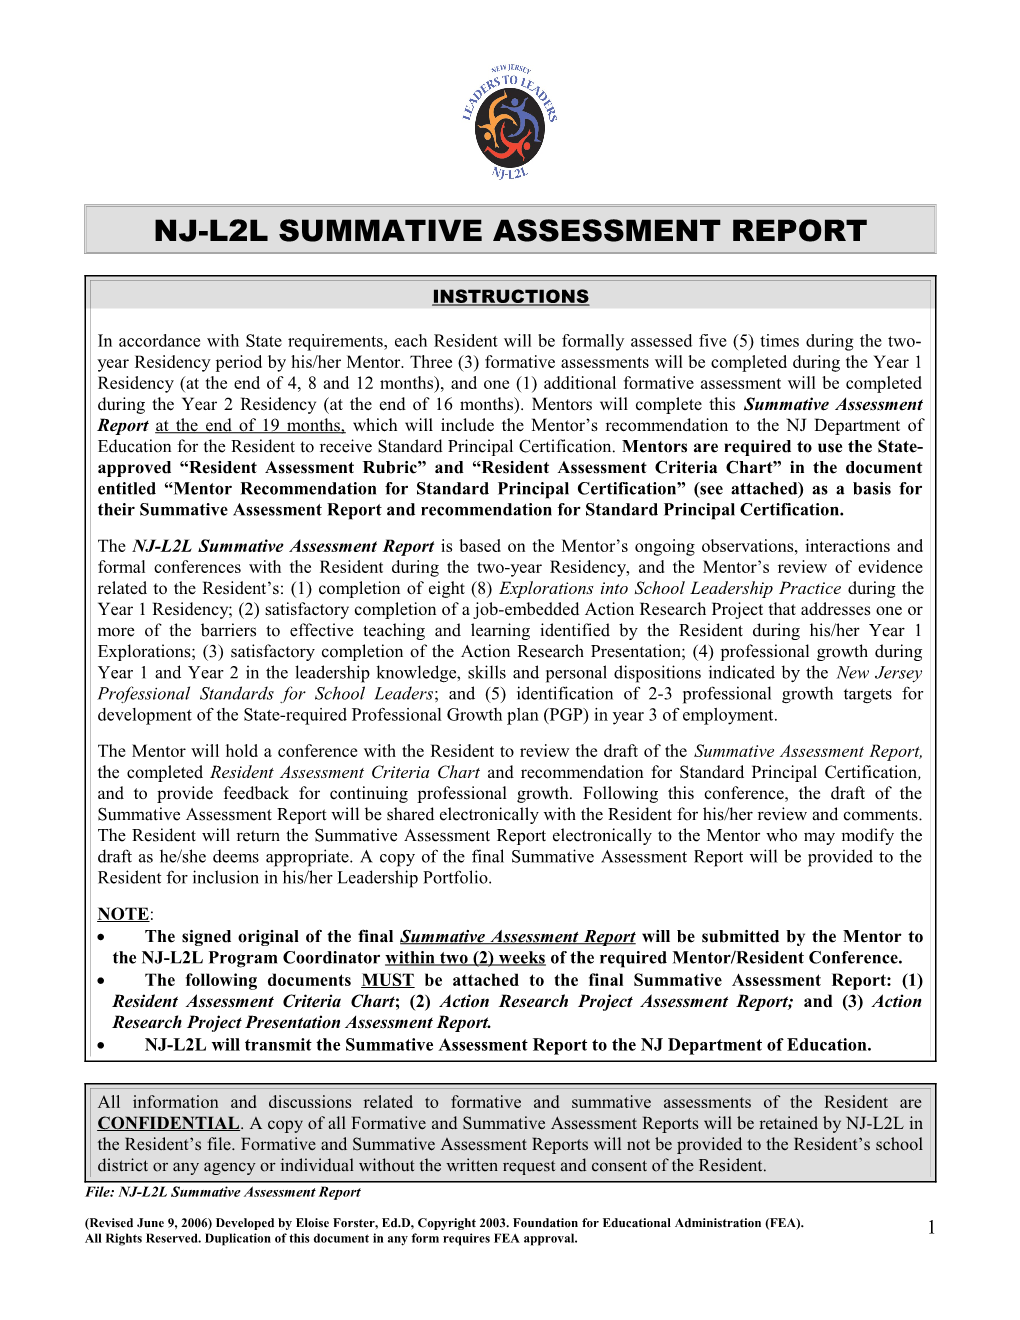 Field Observation Assessment Report